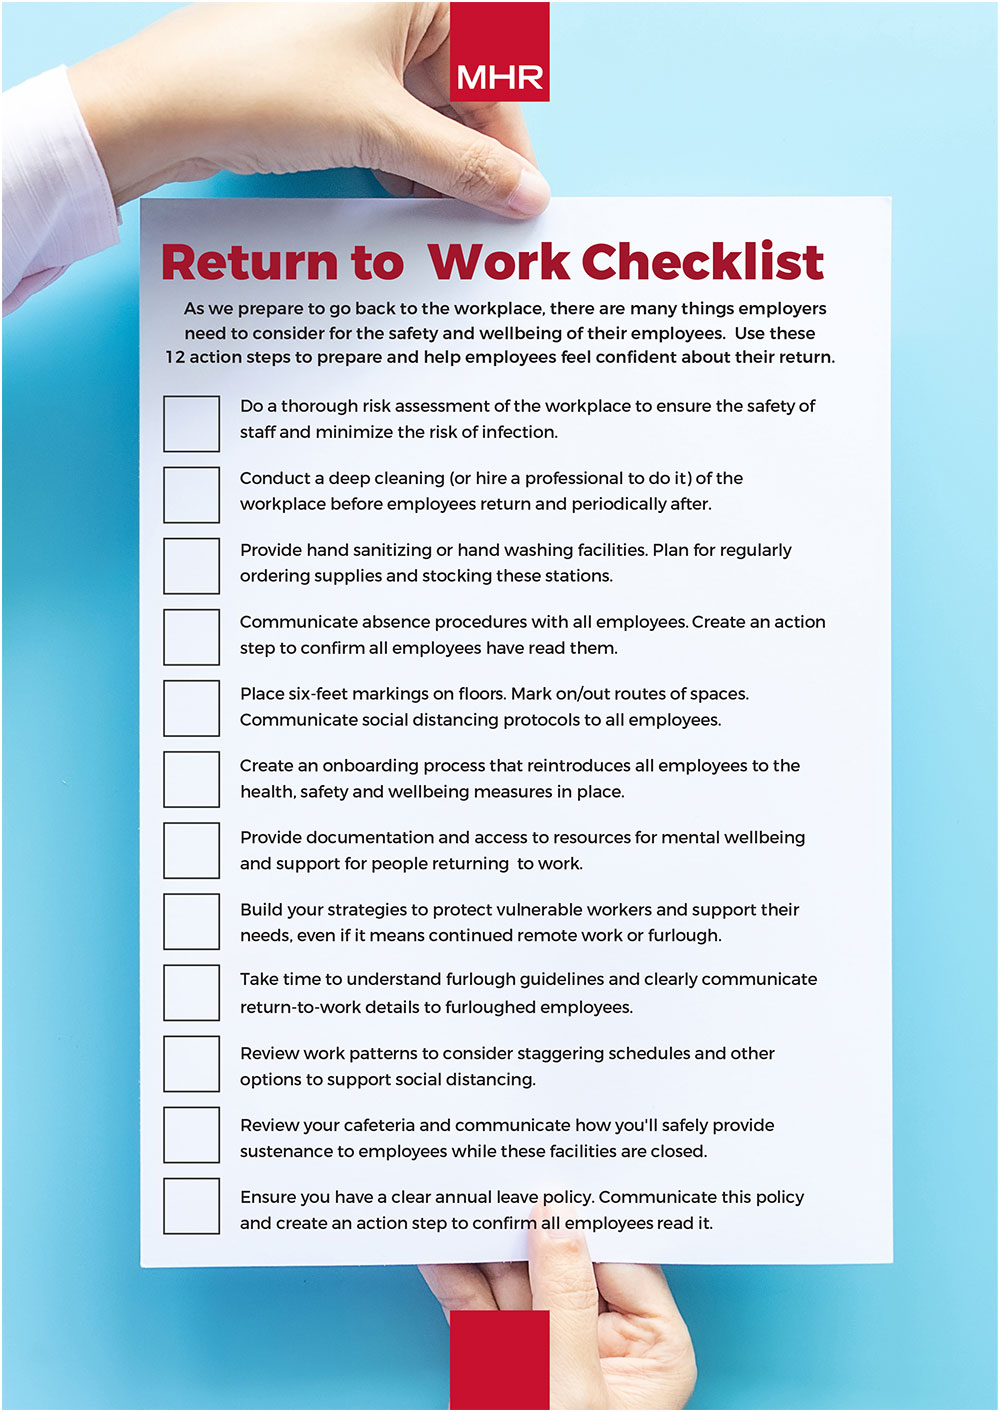 How to Prepare Return to Work Checklist MHR